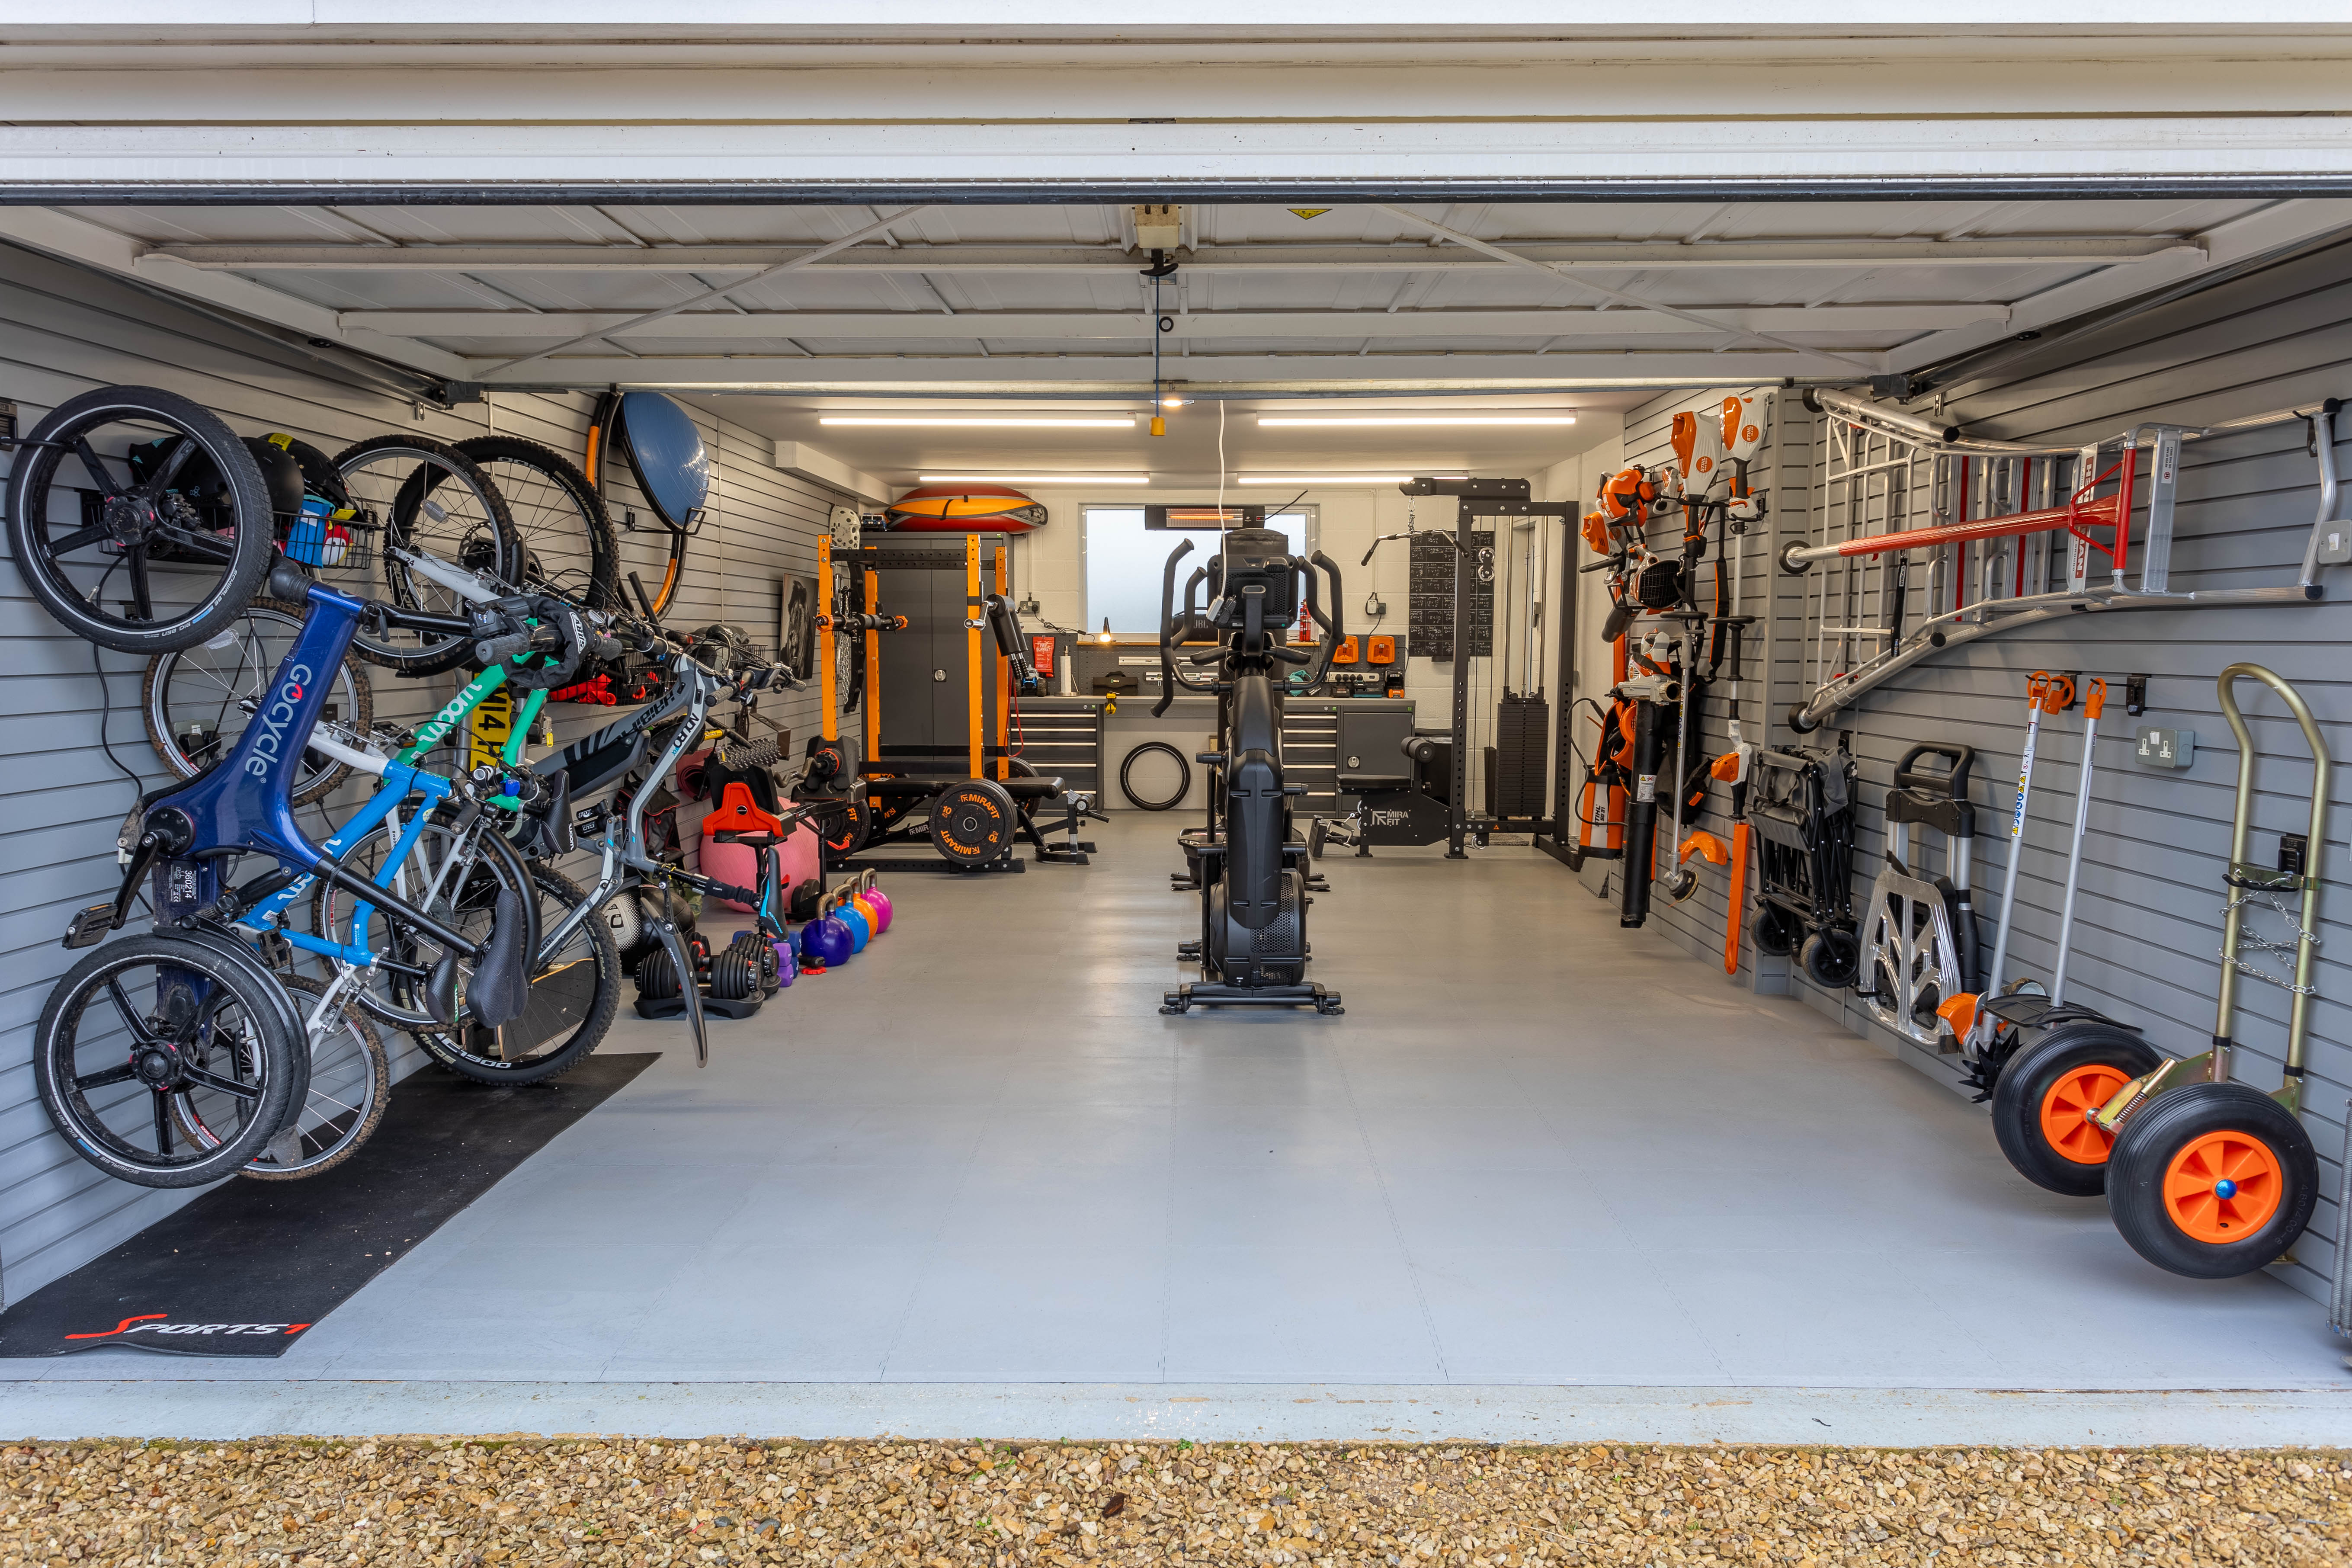 completed garage interior design